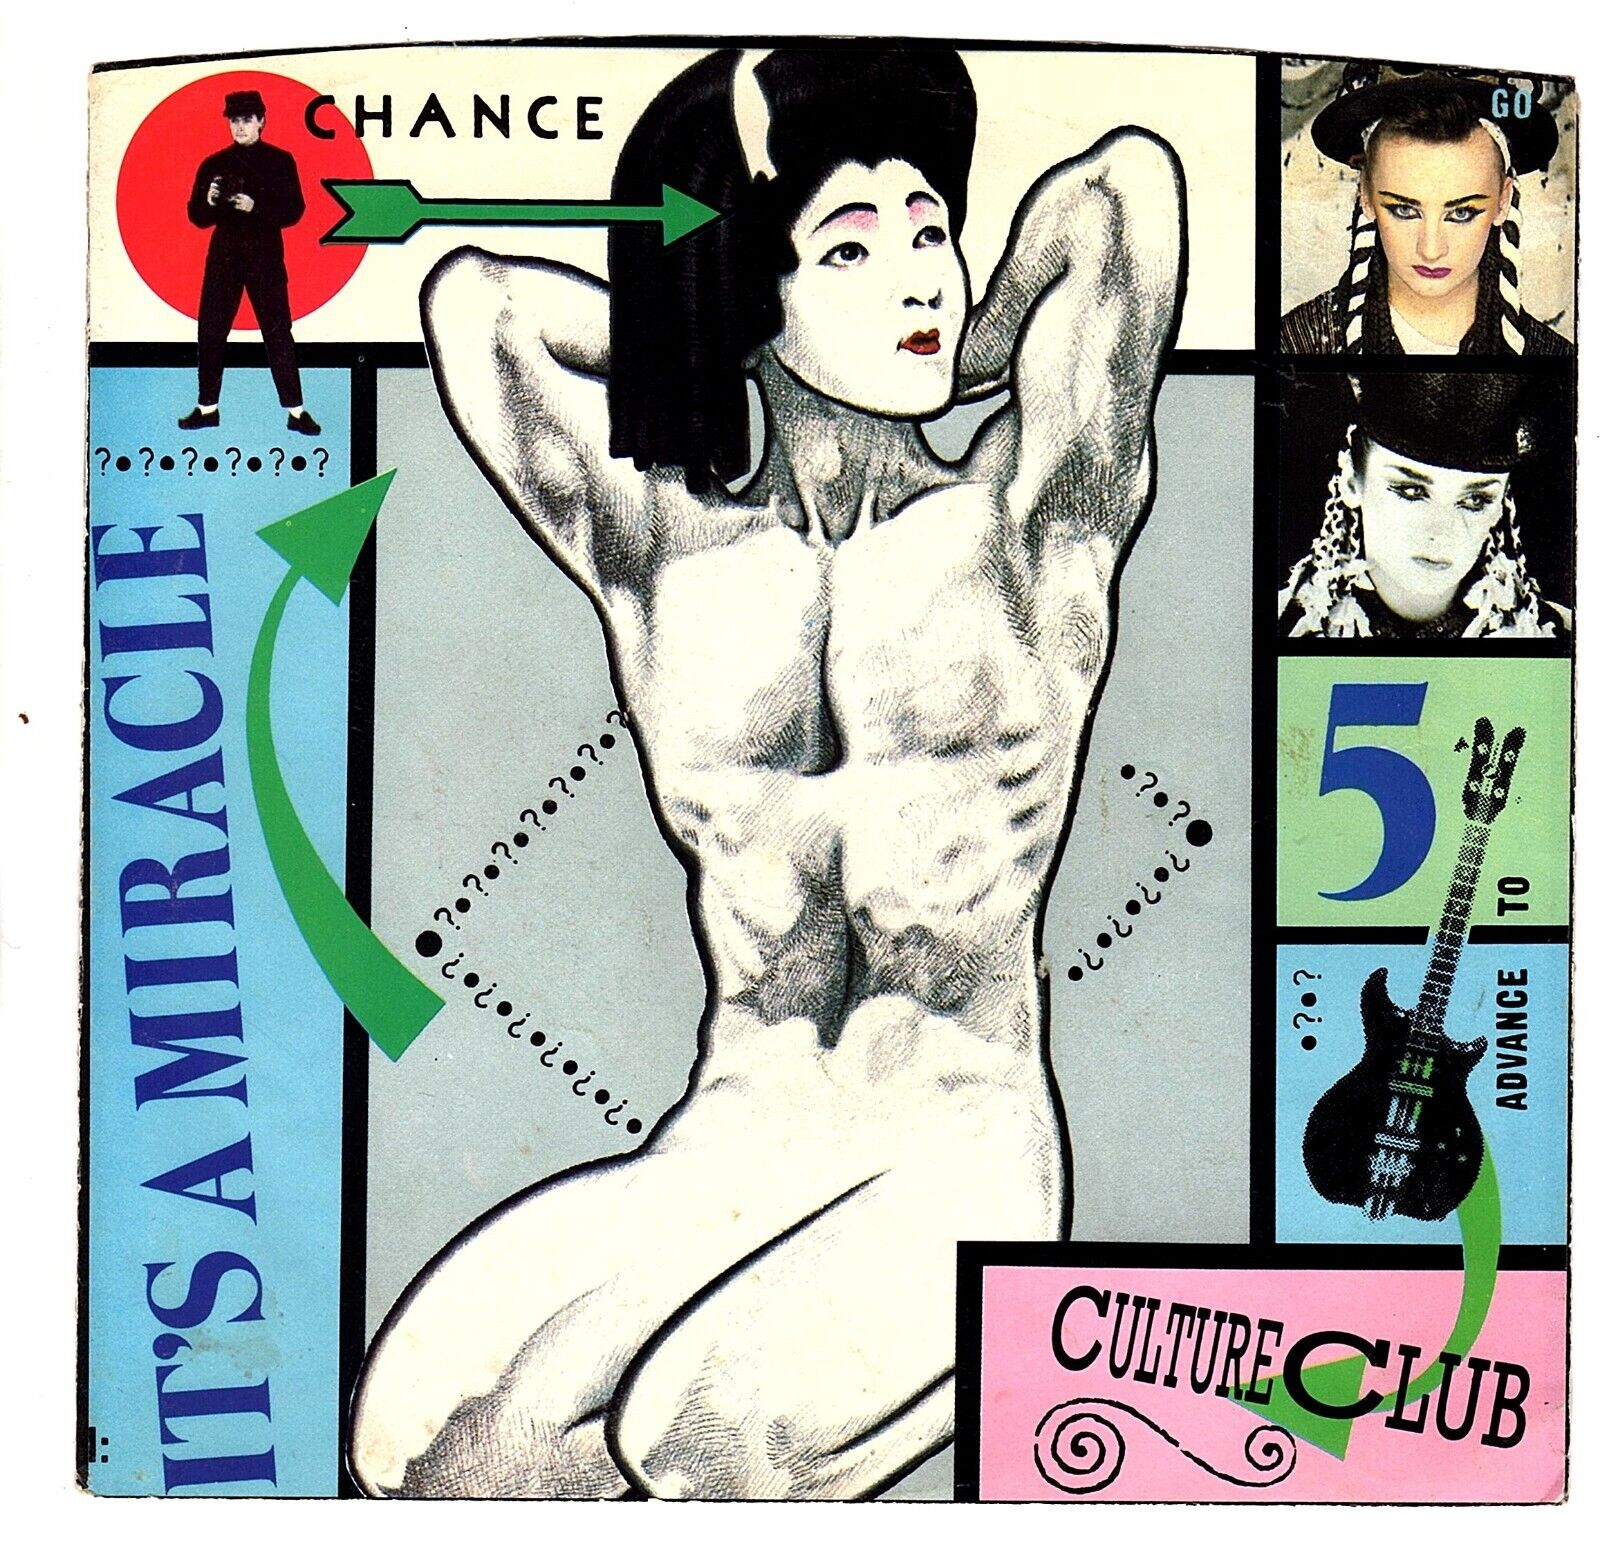 CULTURE CLUB Vinyl, LP 7" Record Single "IT'S A MIRACLE" Boy George 1984